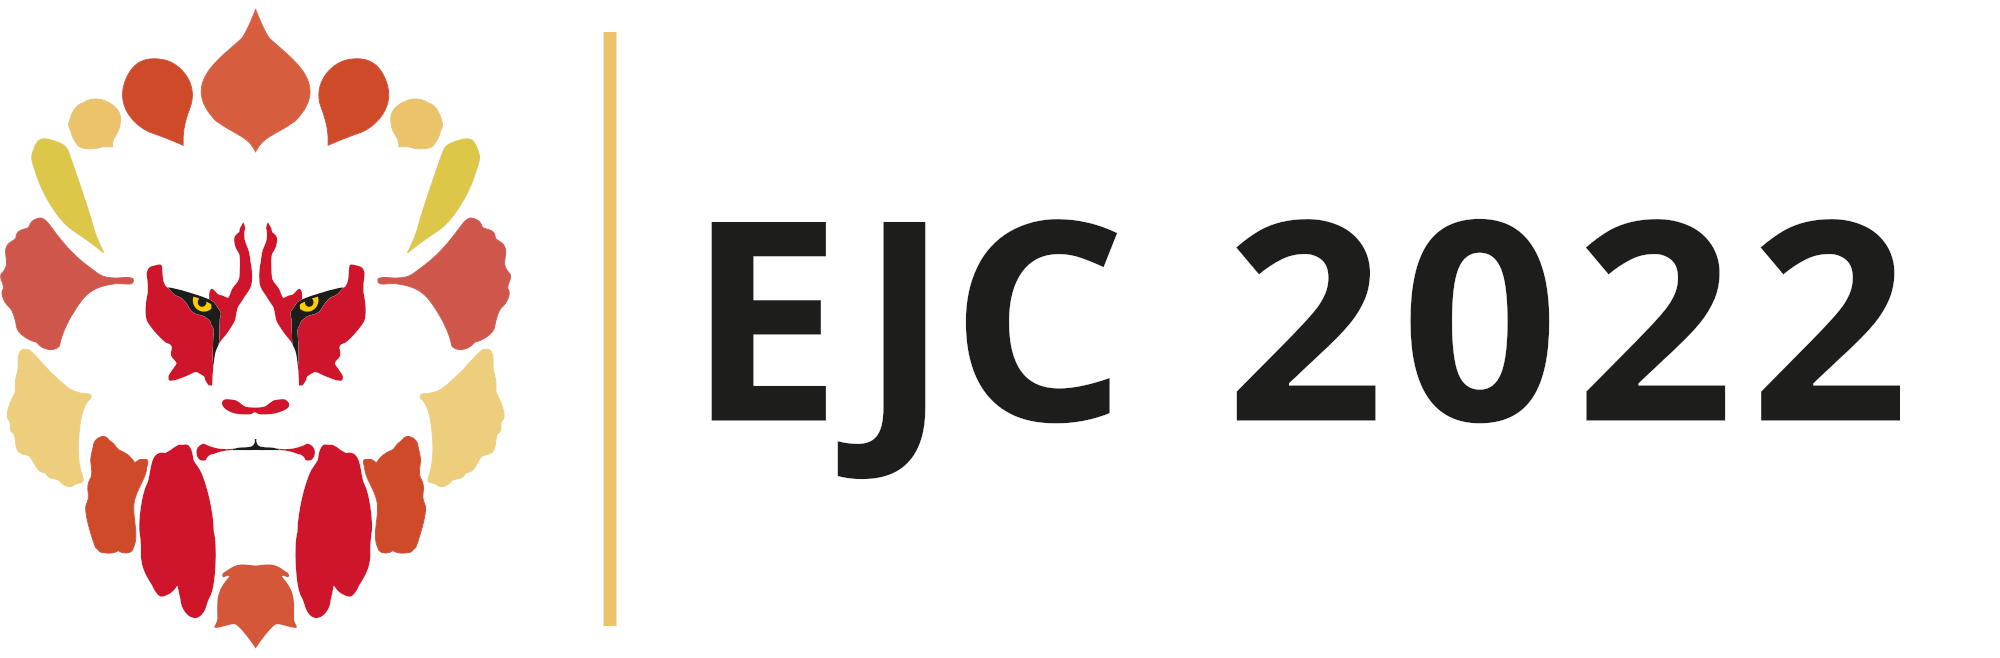 EJC 2022